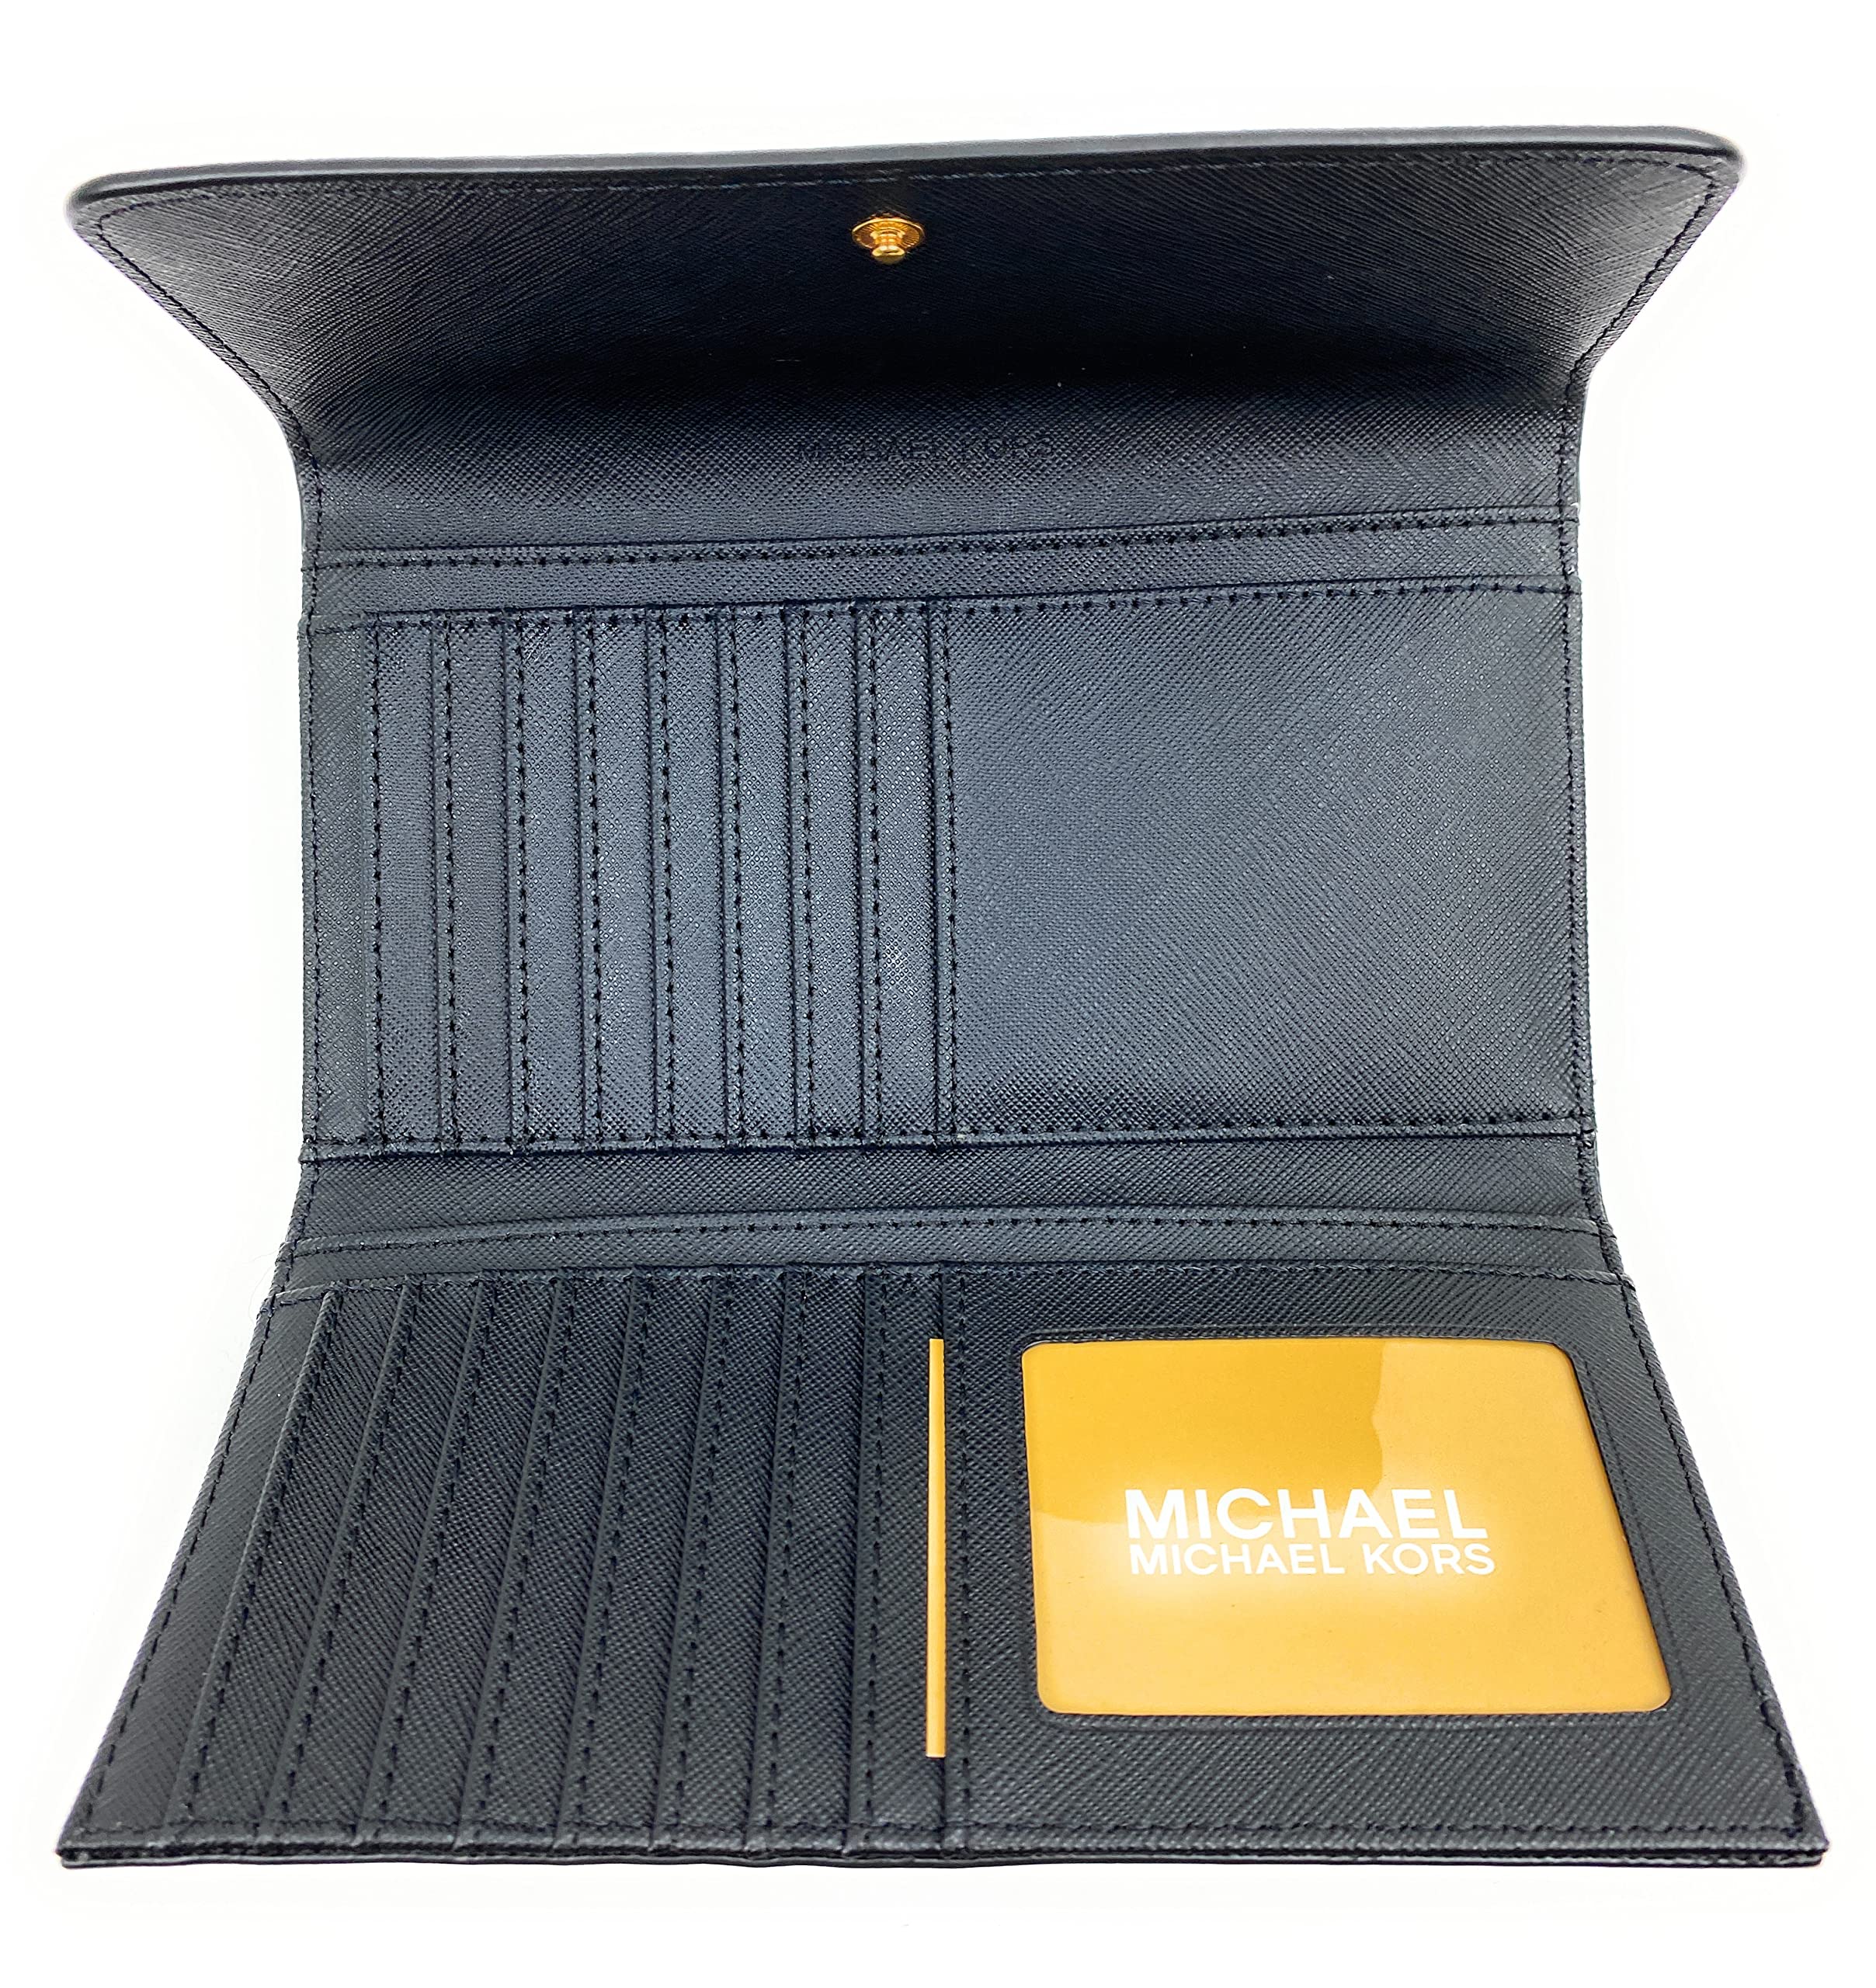 MICHAEL KORS Michael Jet Set continental wallet  Black  Michael Kors  wallet 34F9GTVZ3L online on GIGLIOCOM